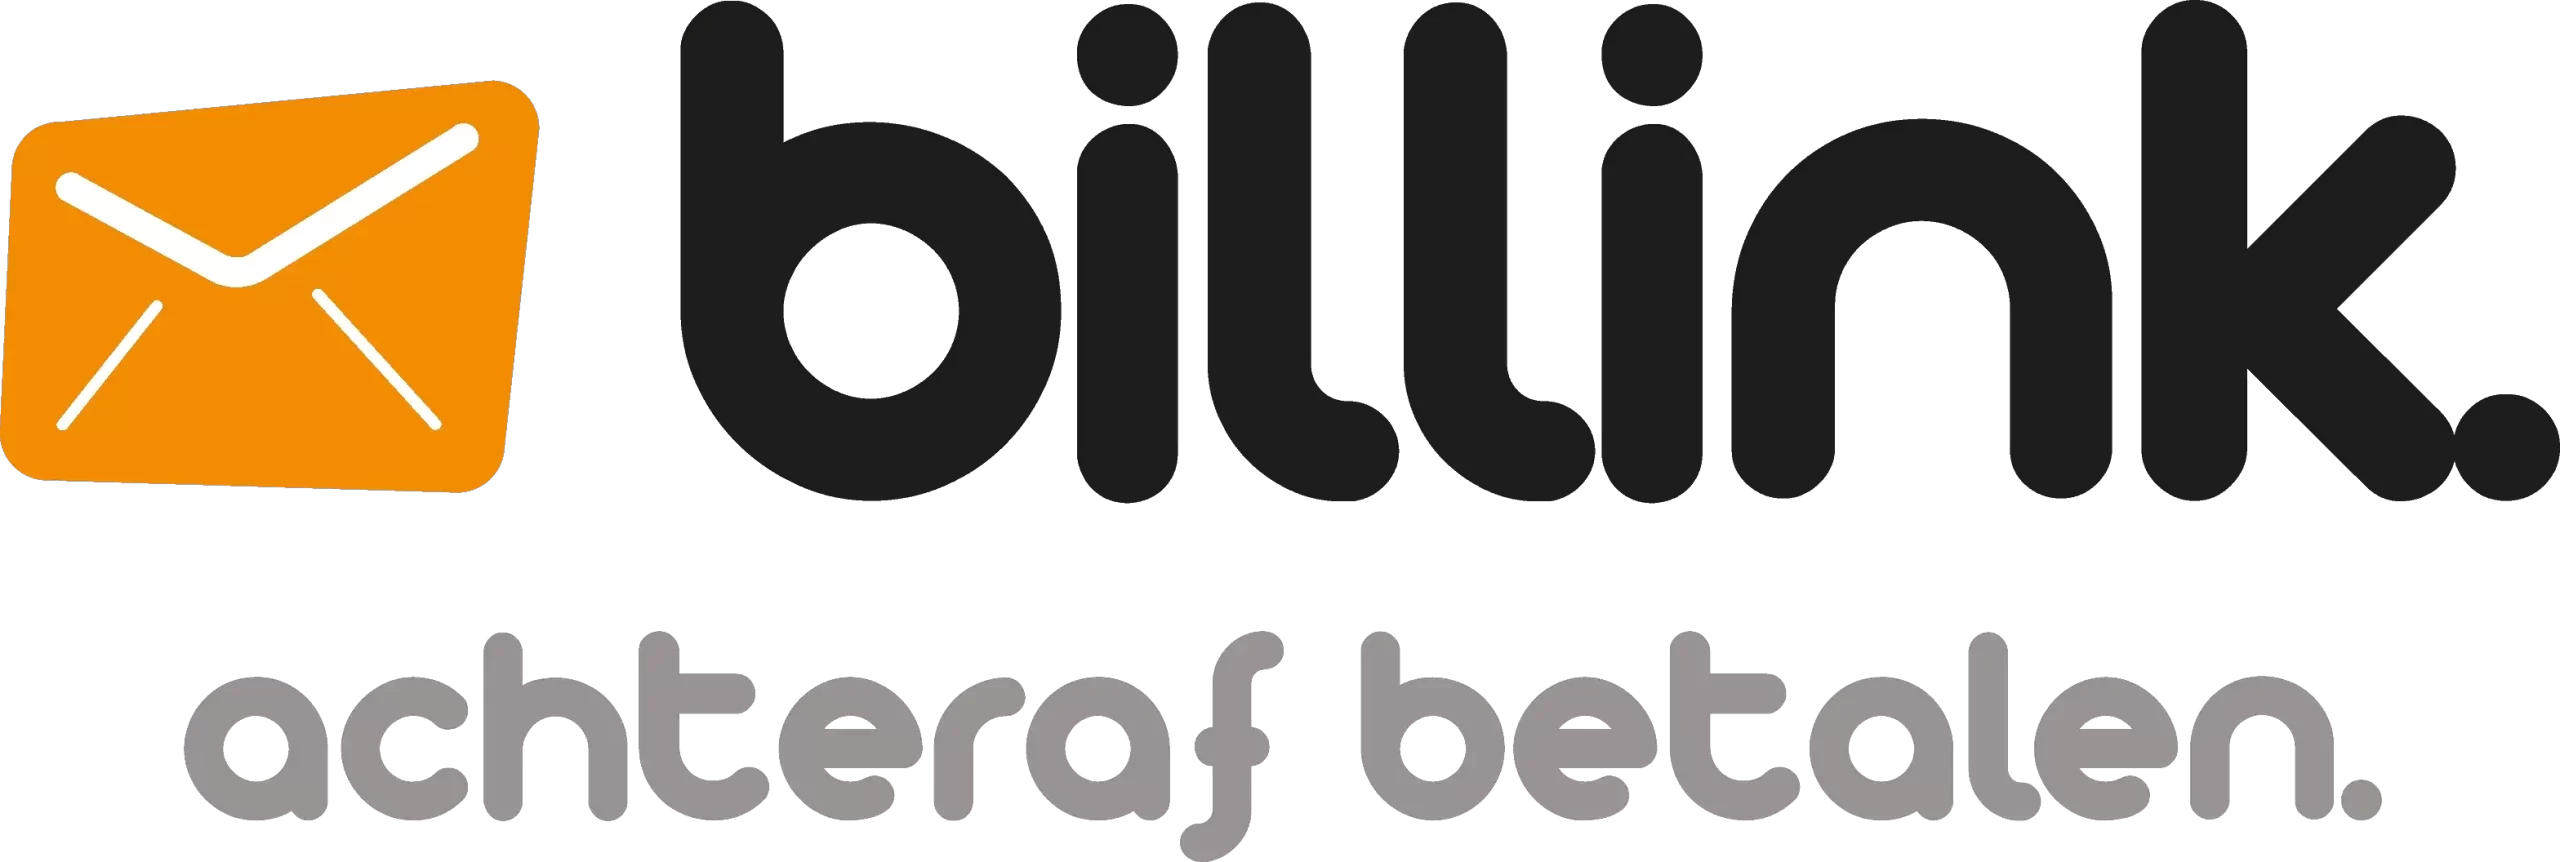 billink-logo-transparant-9417548